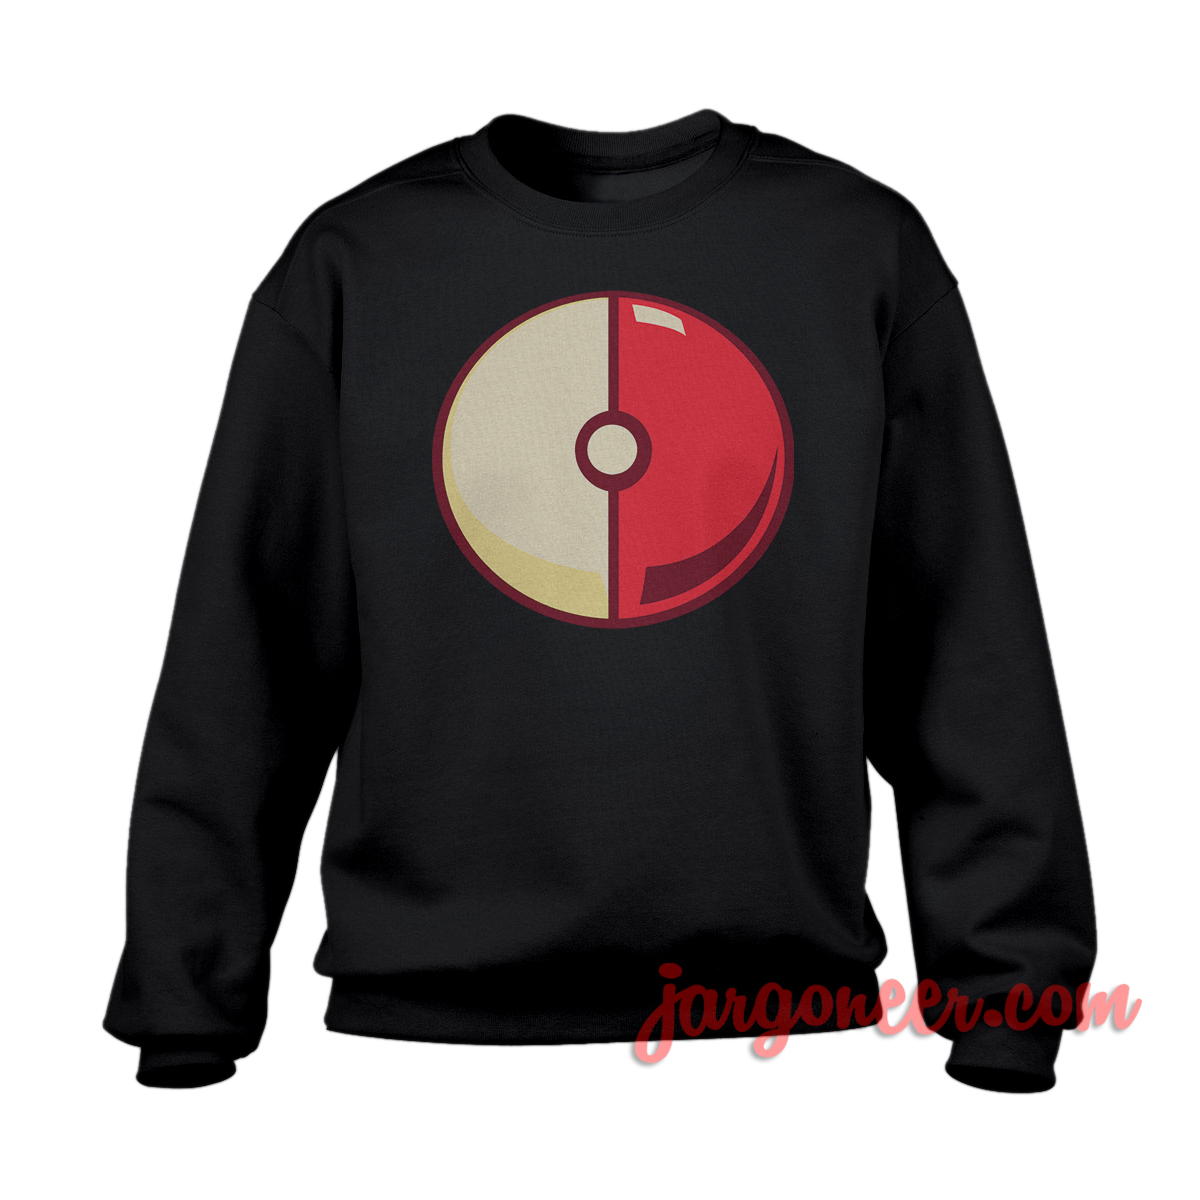 Pokeball Black SS - Shop Unique Graphic Cool Shirt Designs